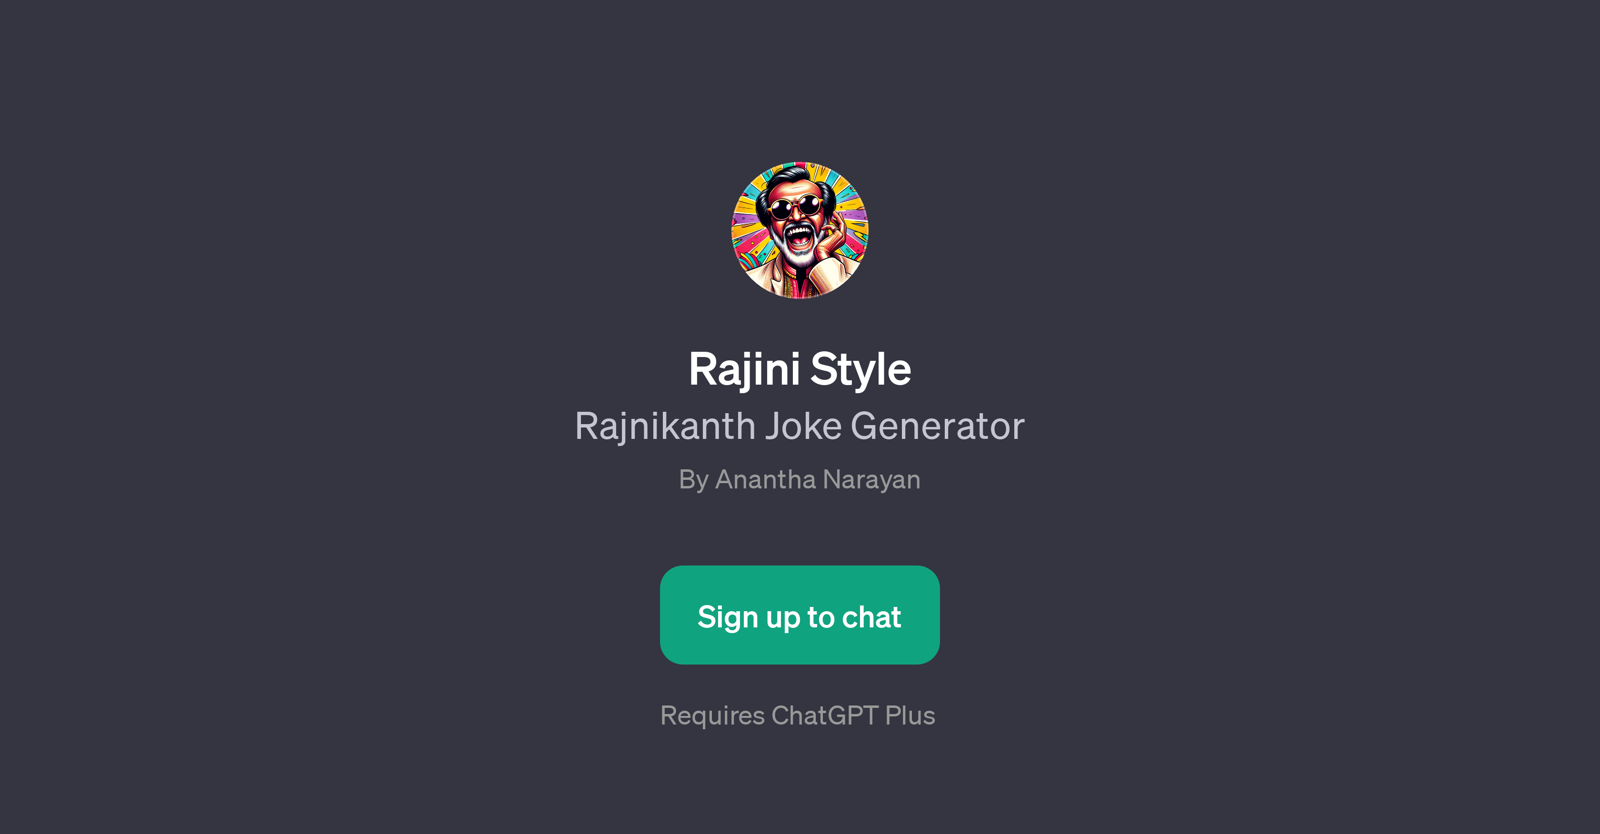 Rajini Style website